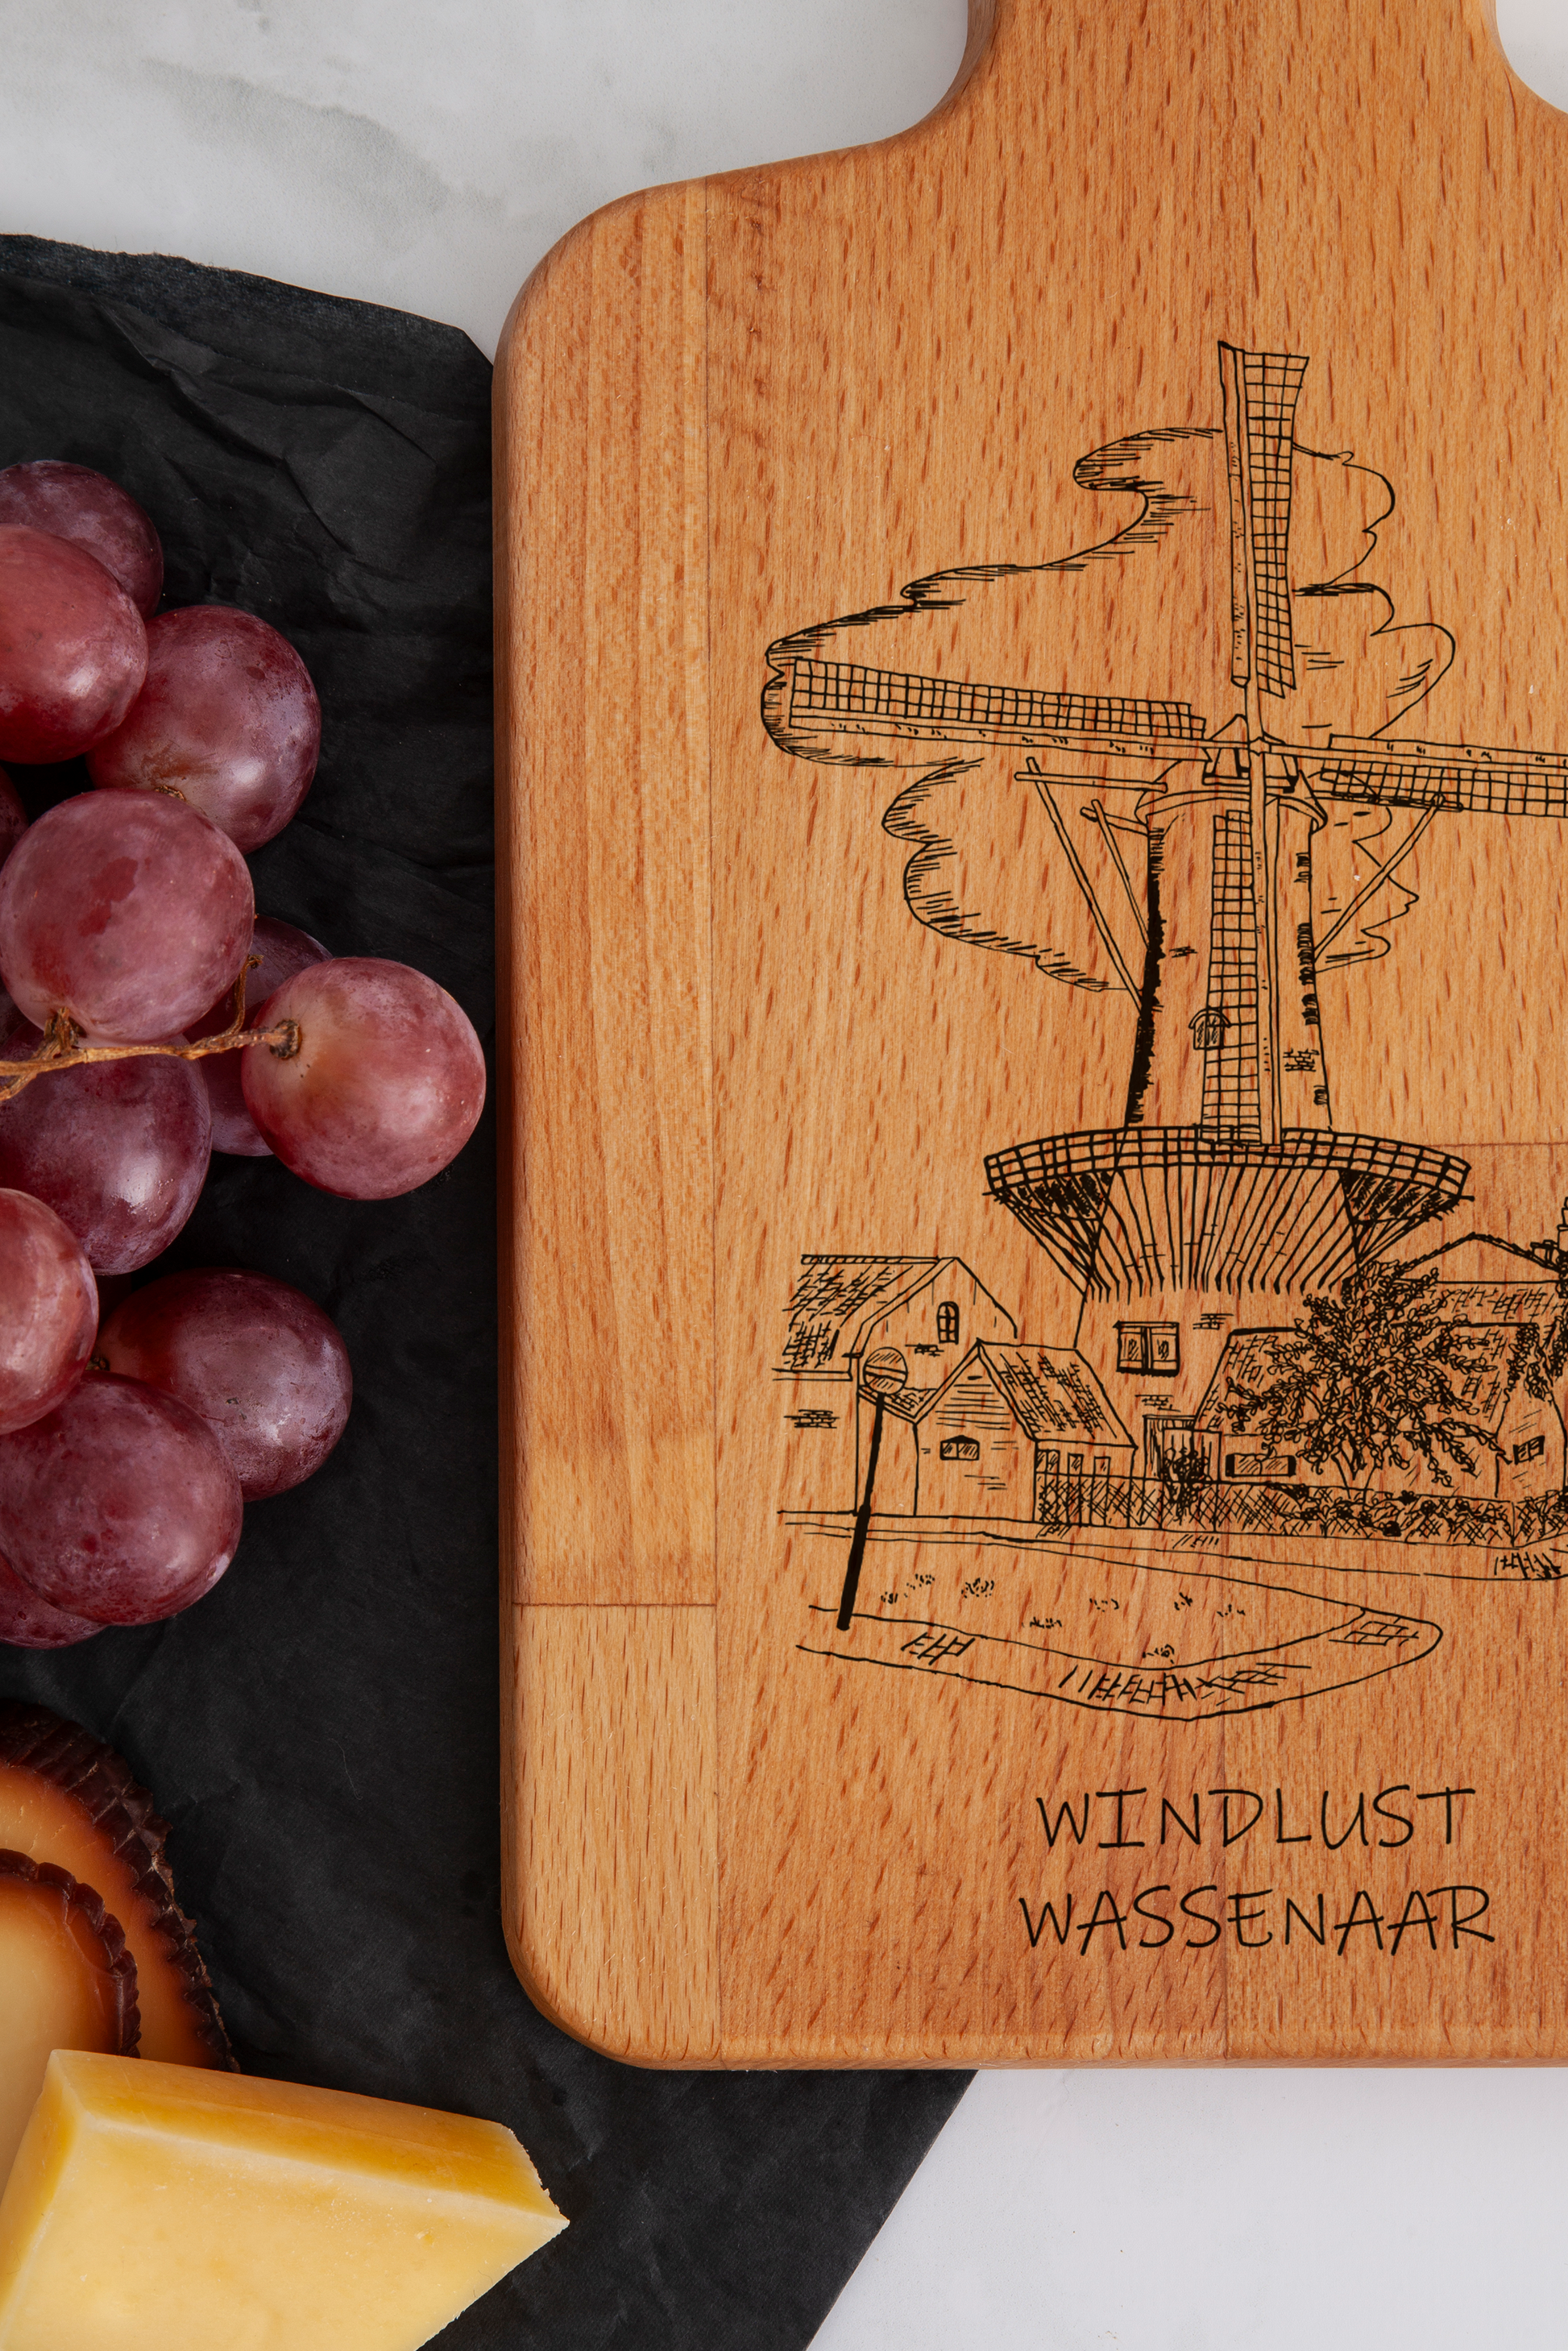 Wassenaar, Windlust, cheese board, close-up